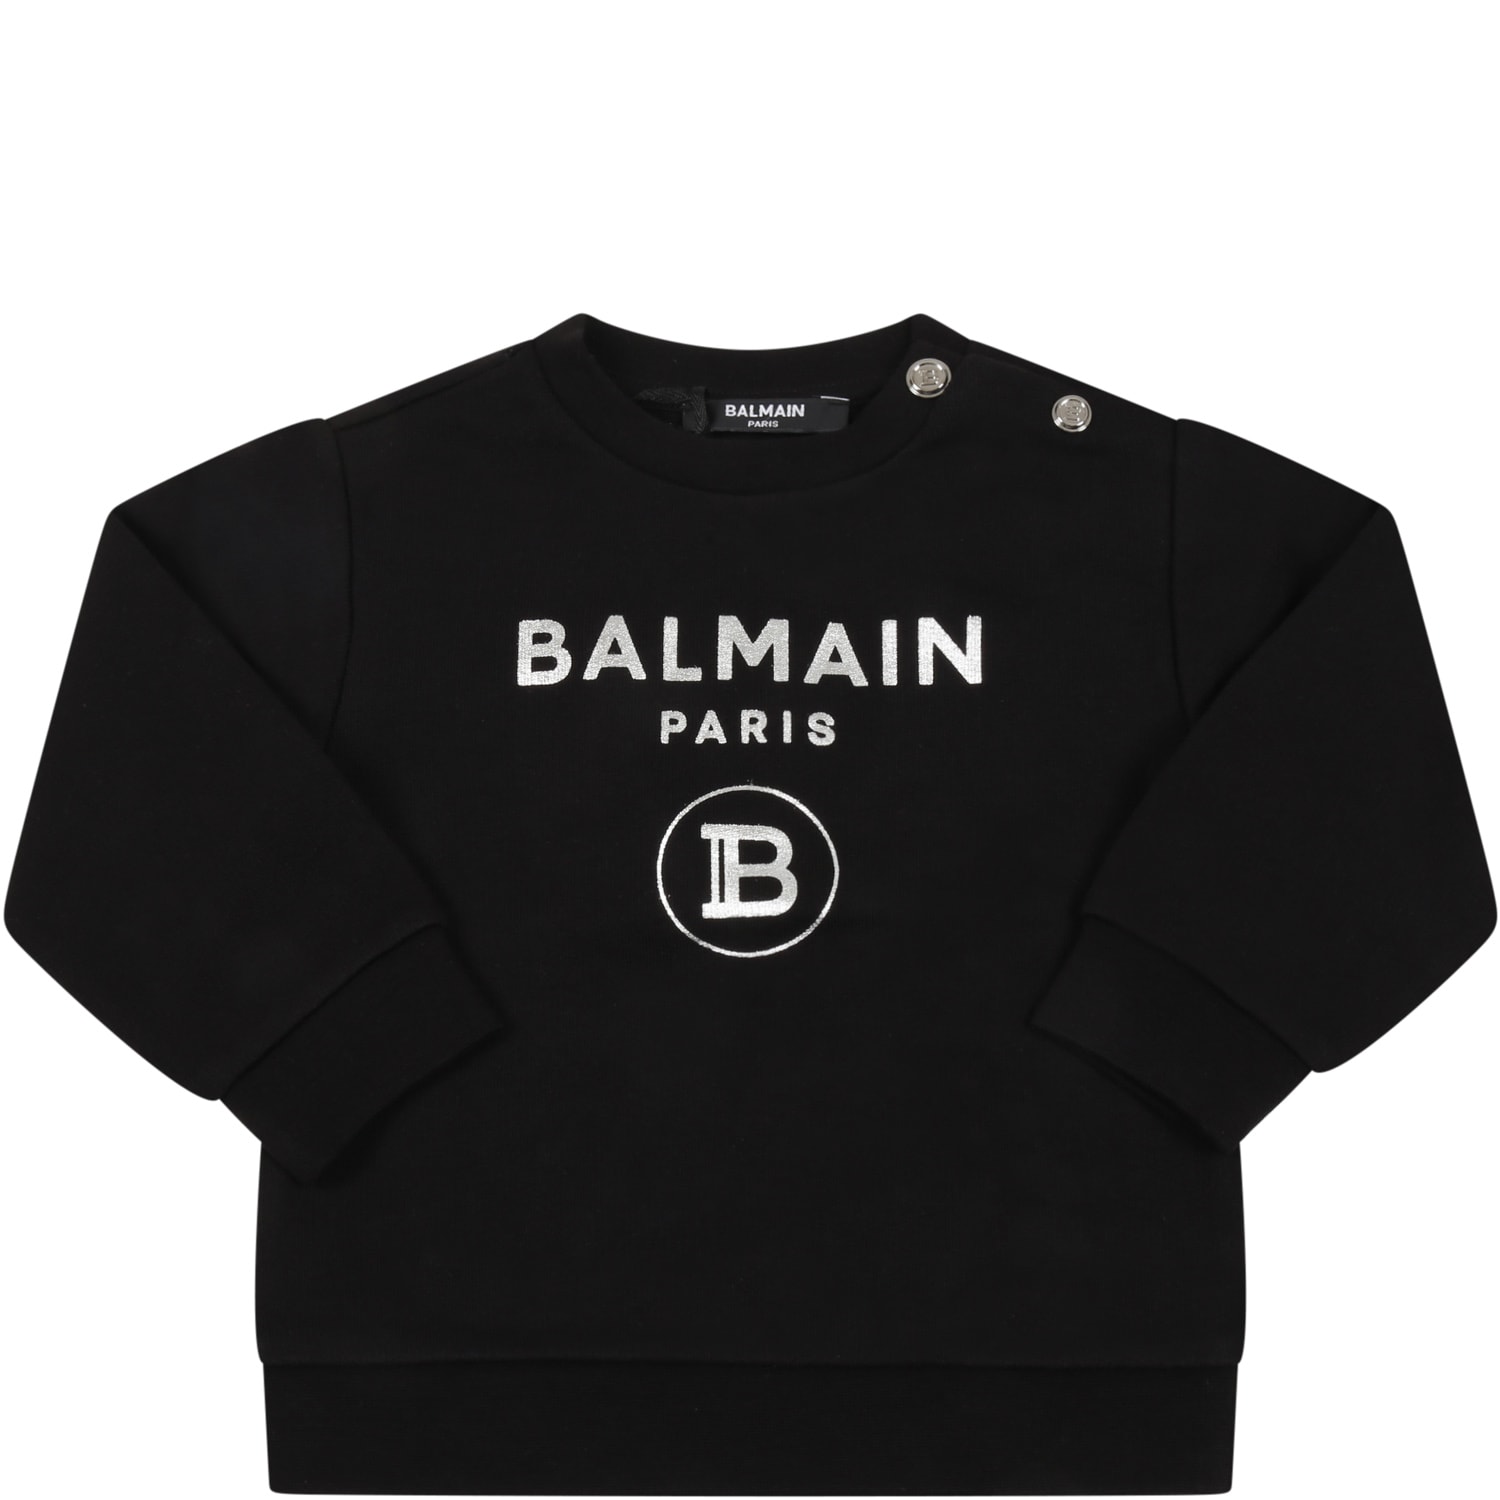 Balmain Black Sweatshirt For Baby Girl With Logos